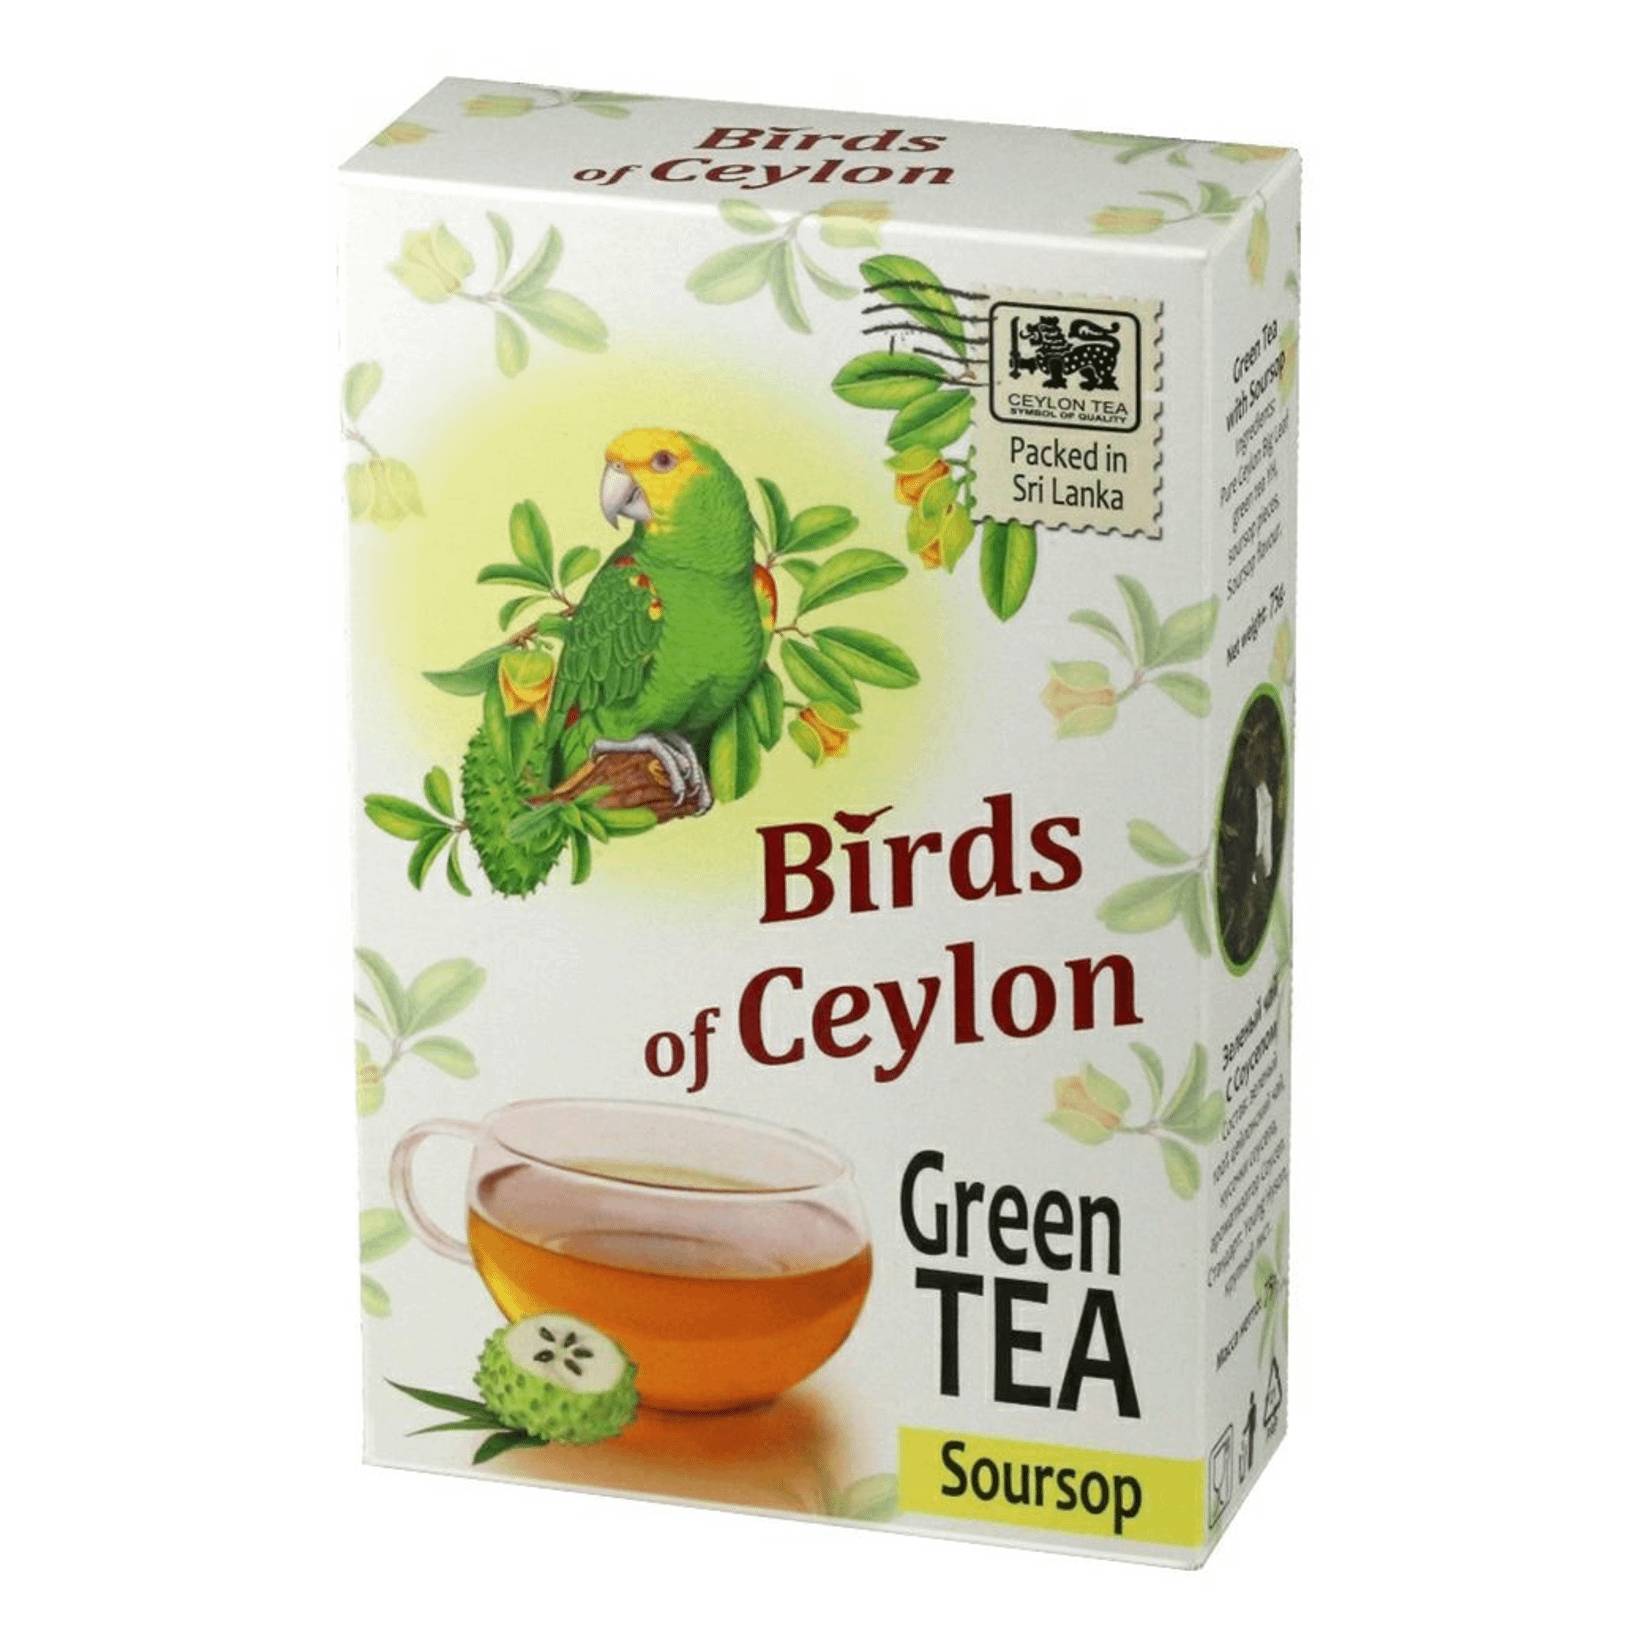 чай birds of ceylon птицы цейлона масала 75 г Чай Birds Of Ceylon птицы цейлона соусэп зеленый, 75 г